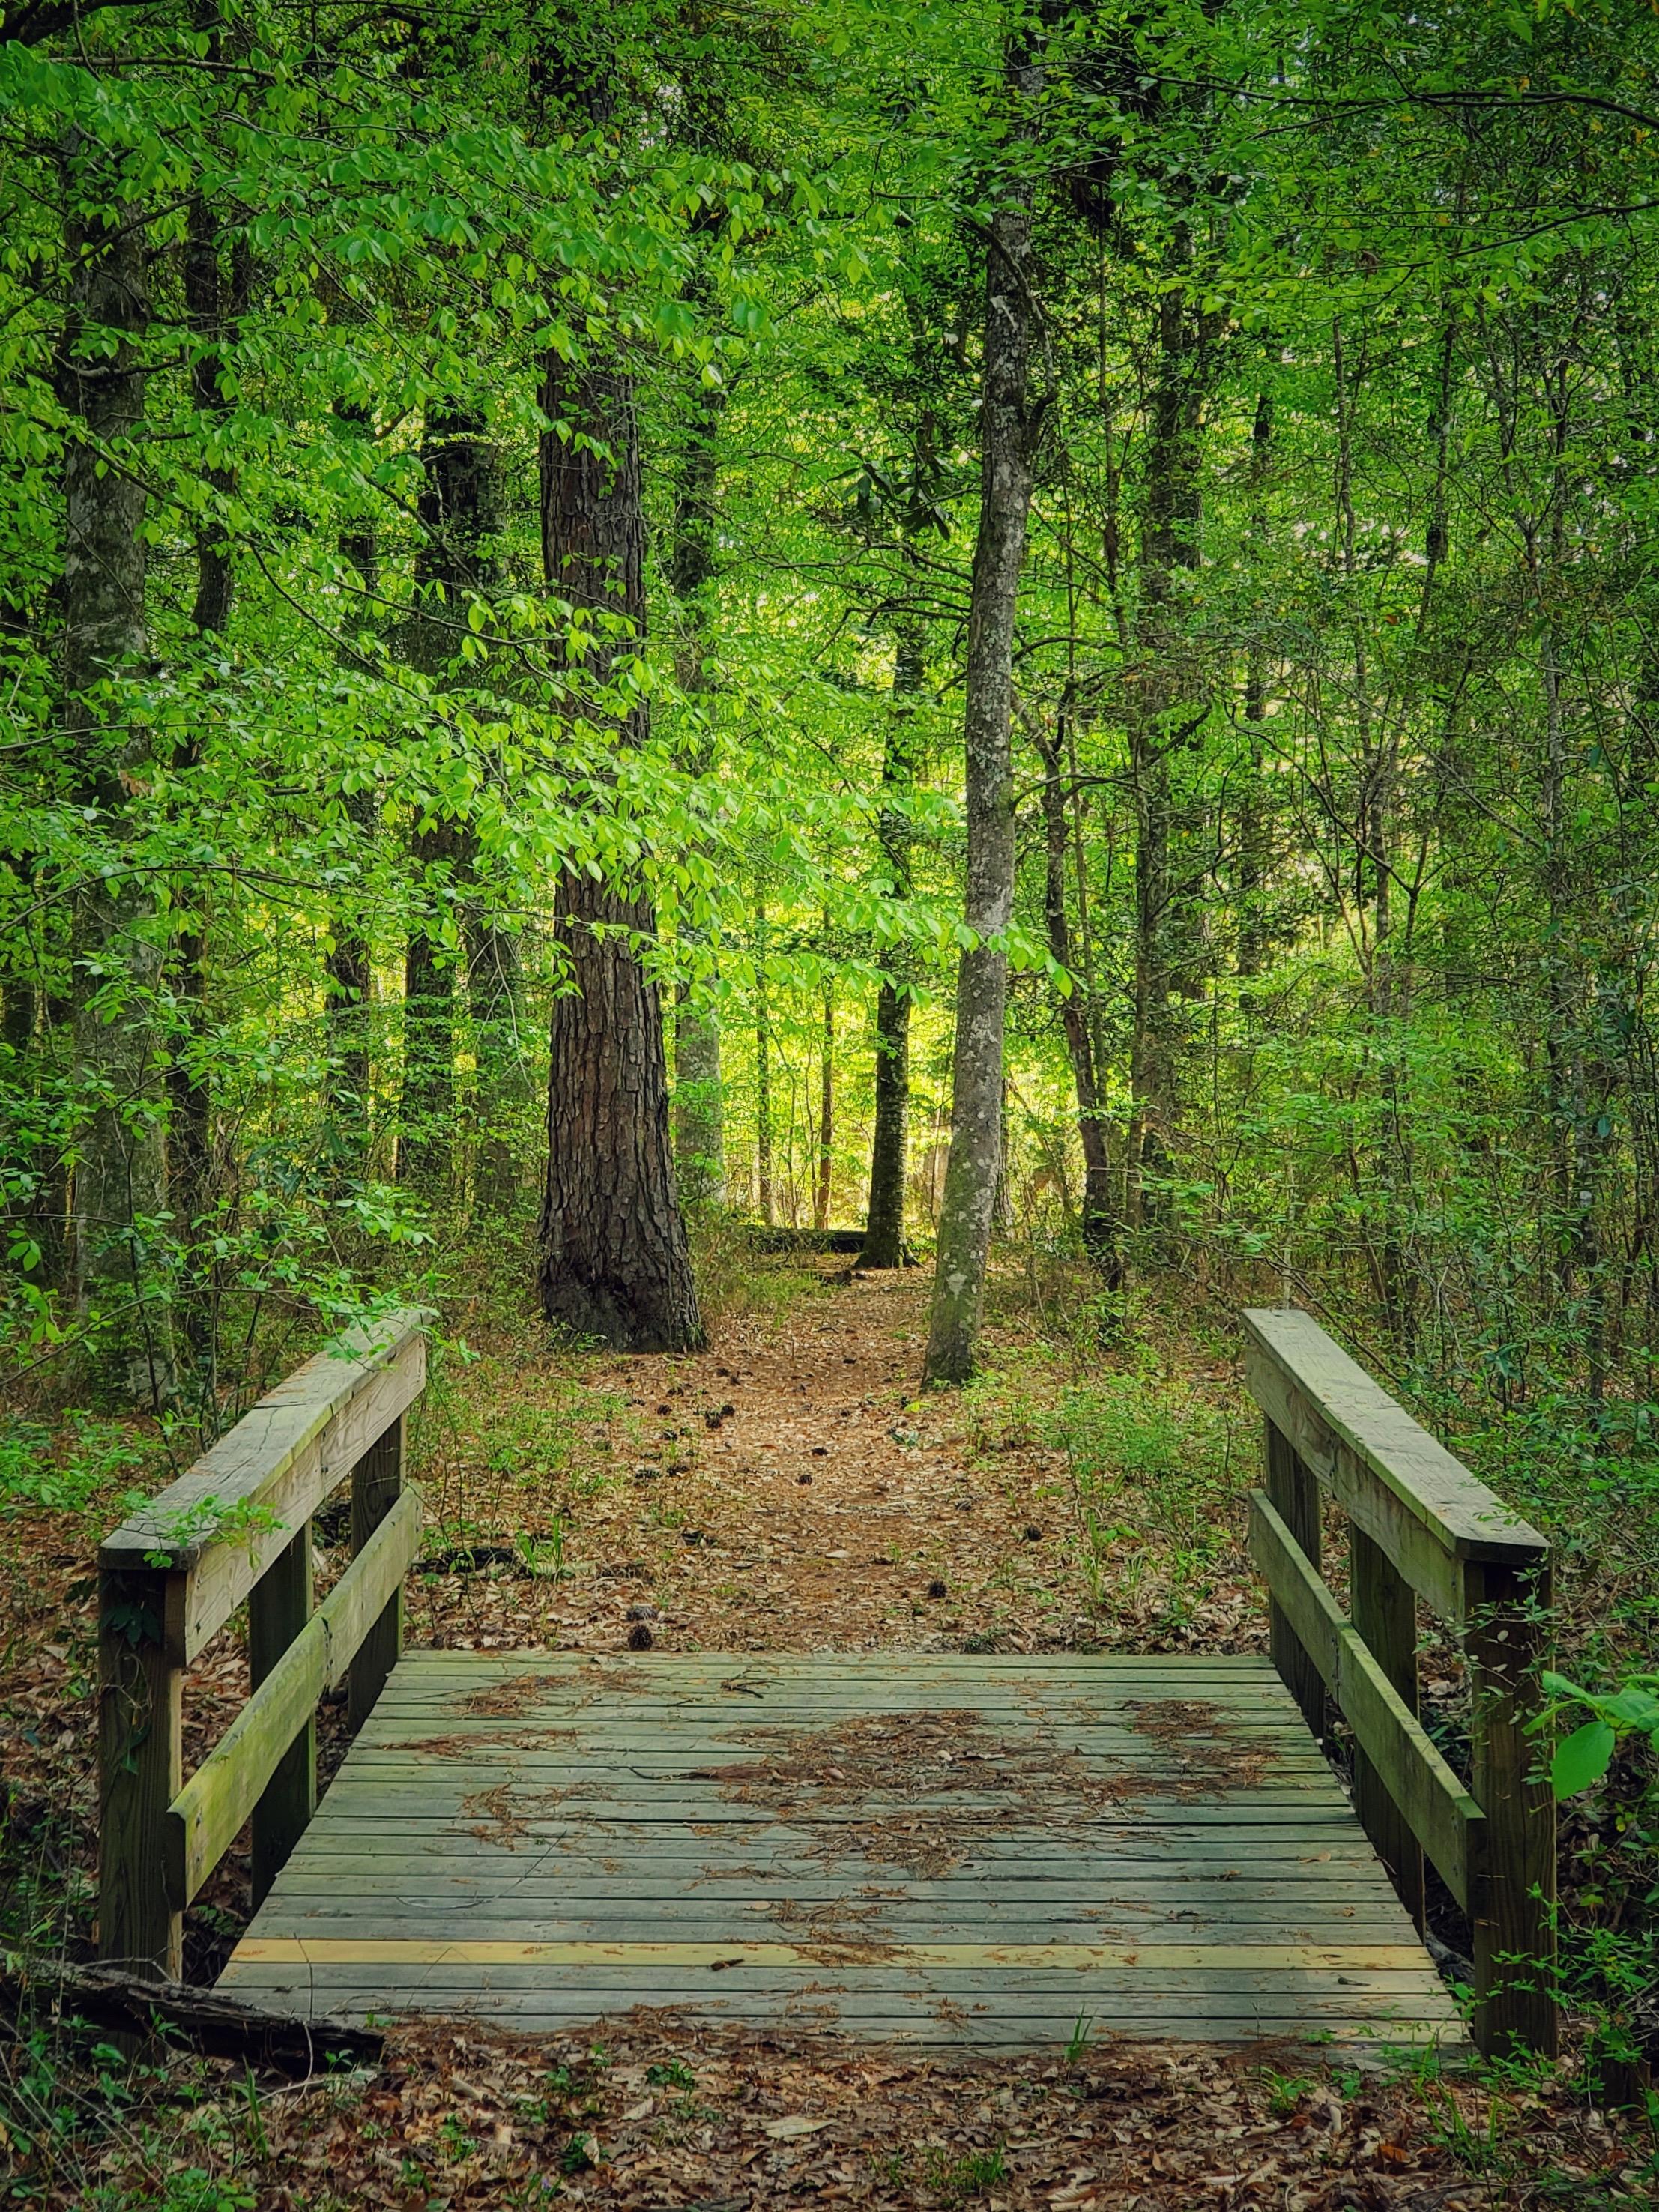 A small wooden bridge on a trail through dense woods.